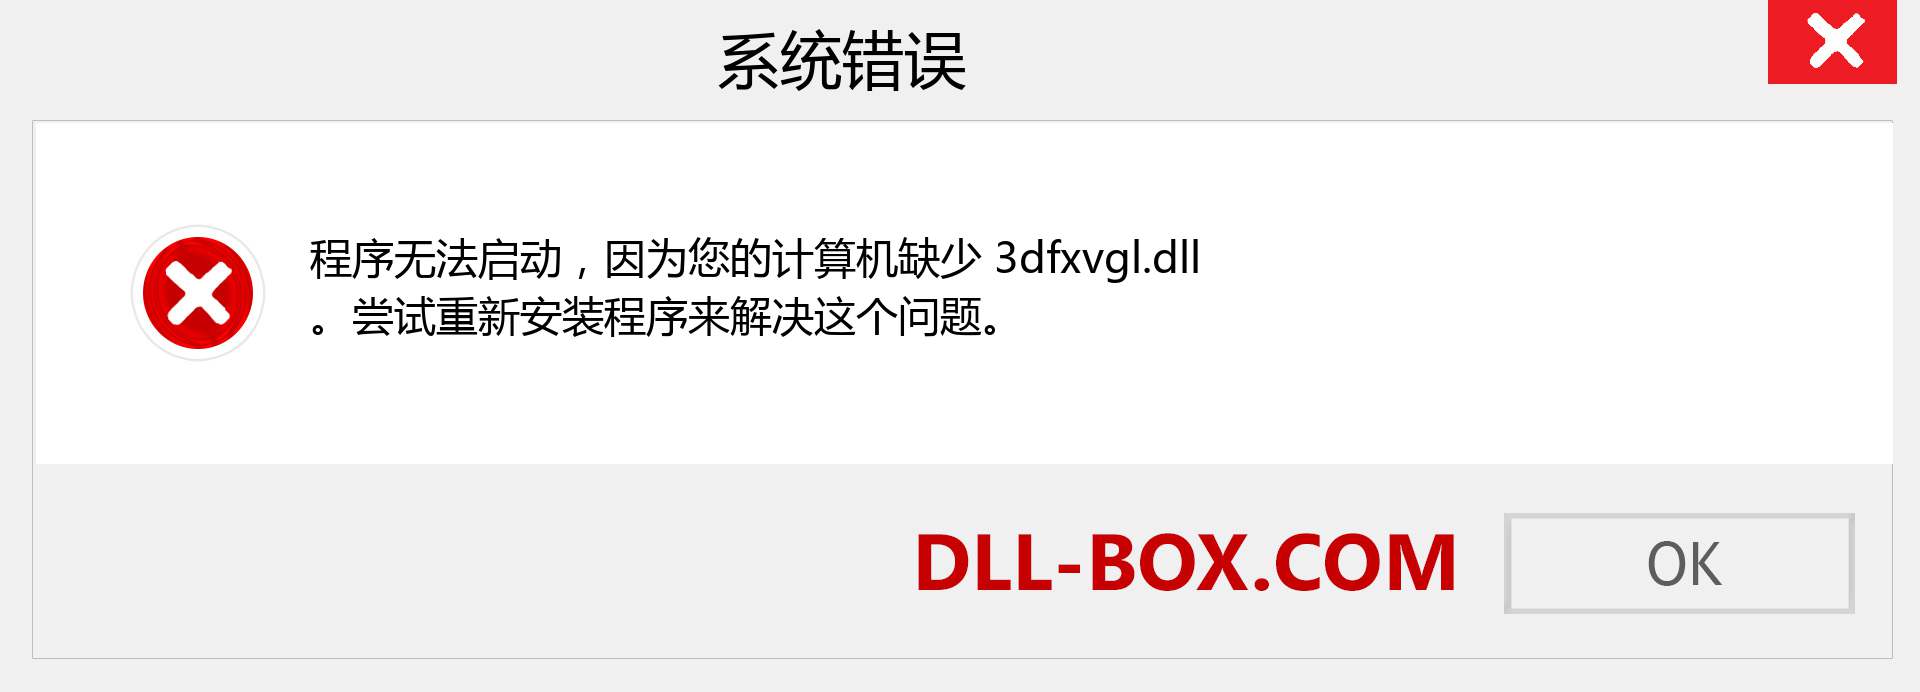 3dfxvgl.dll 文件丢失？。 适用于 Windows 7、8、10 的下载 - 修复 Windows、照片、图像上的 3dfxvgl dll 丢失错误